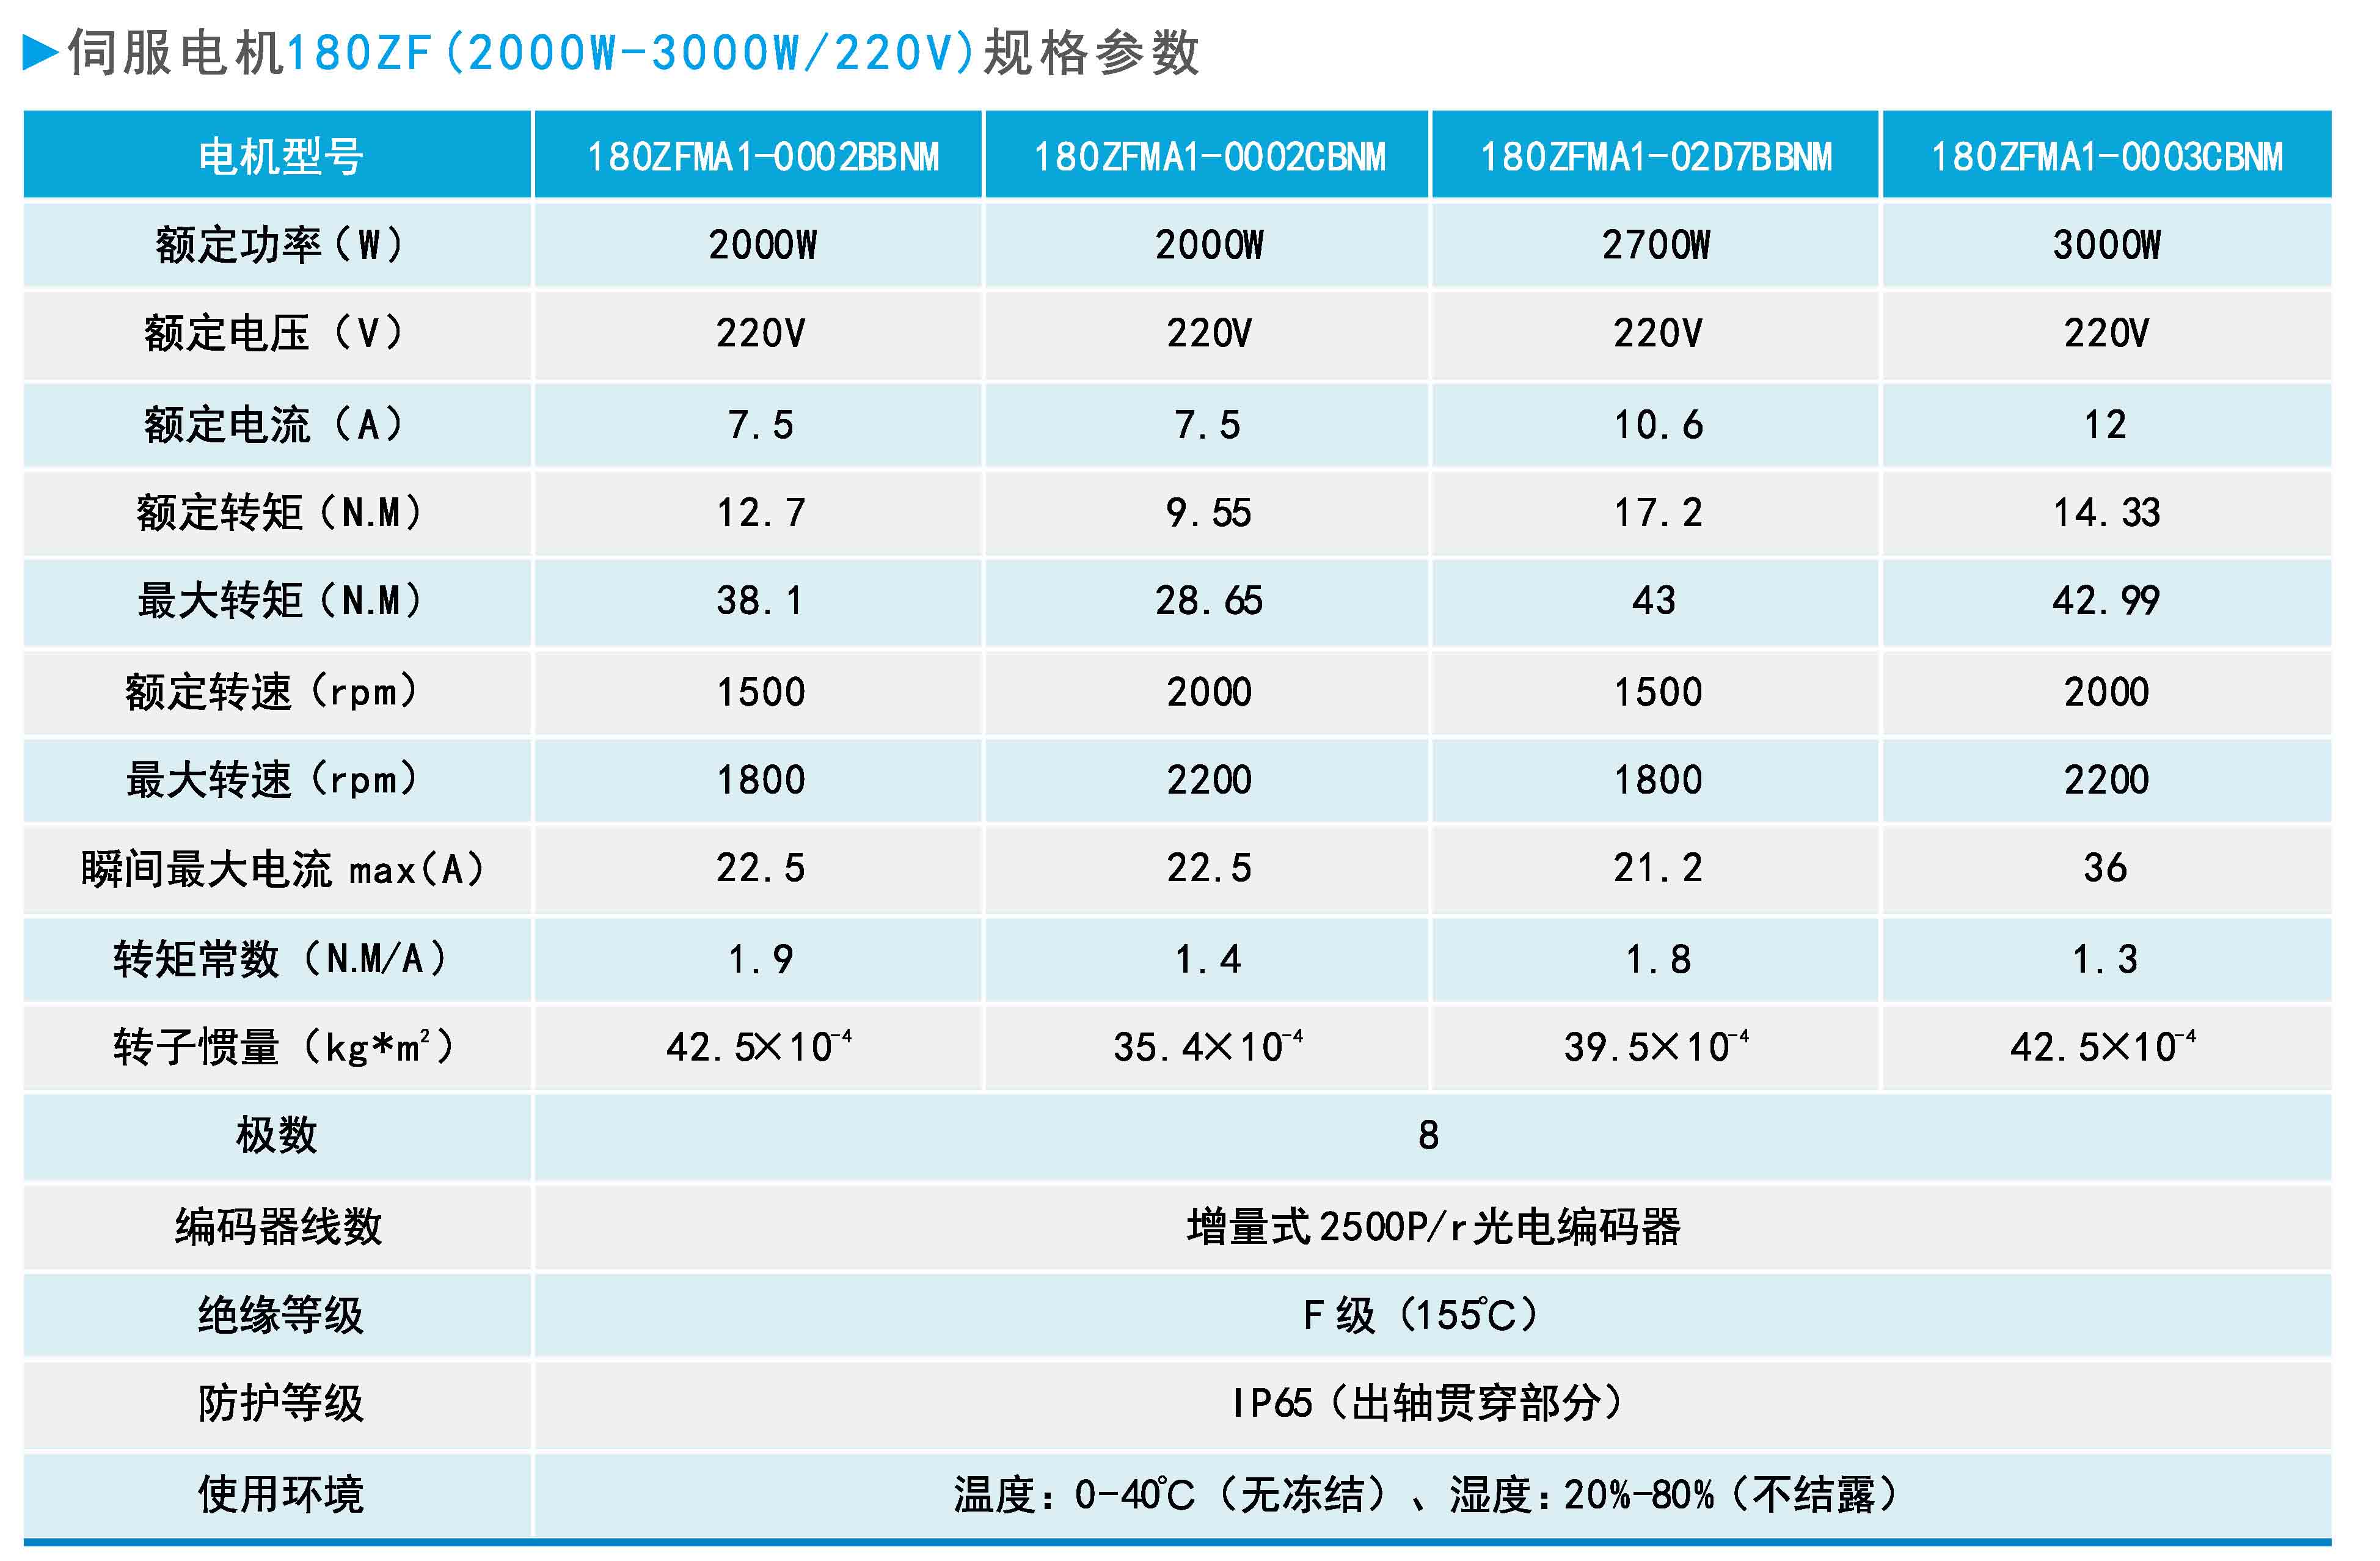 ZF180(2000W-3000W 220V)系列通用型伺服电机规格参数.JPG